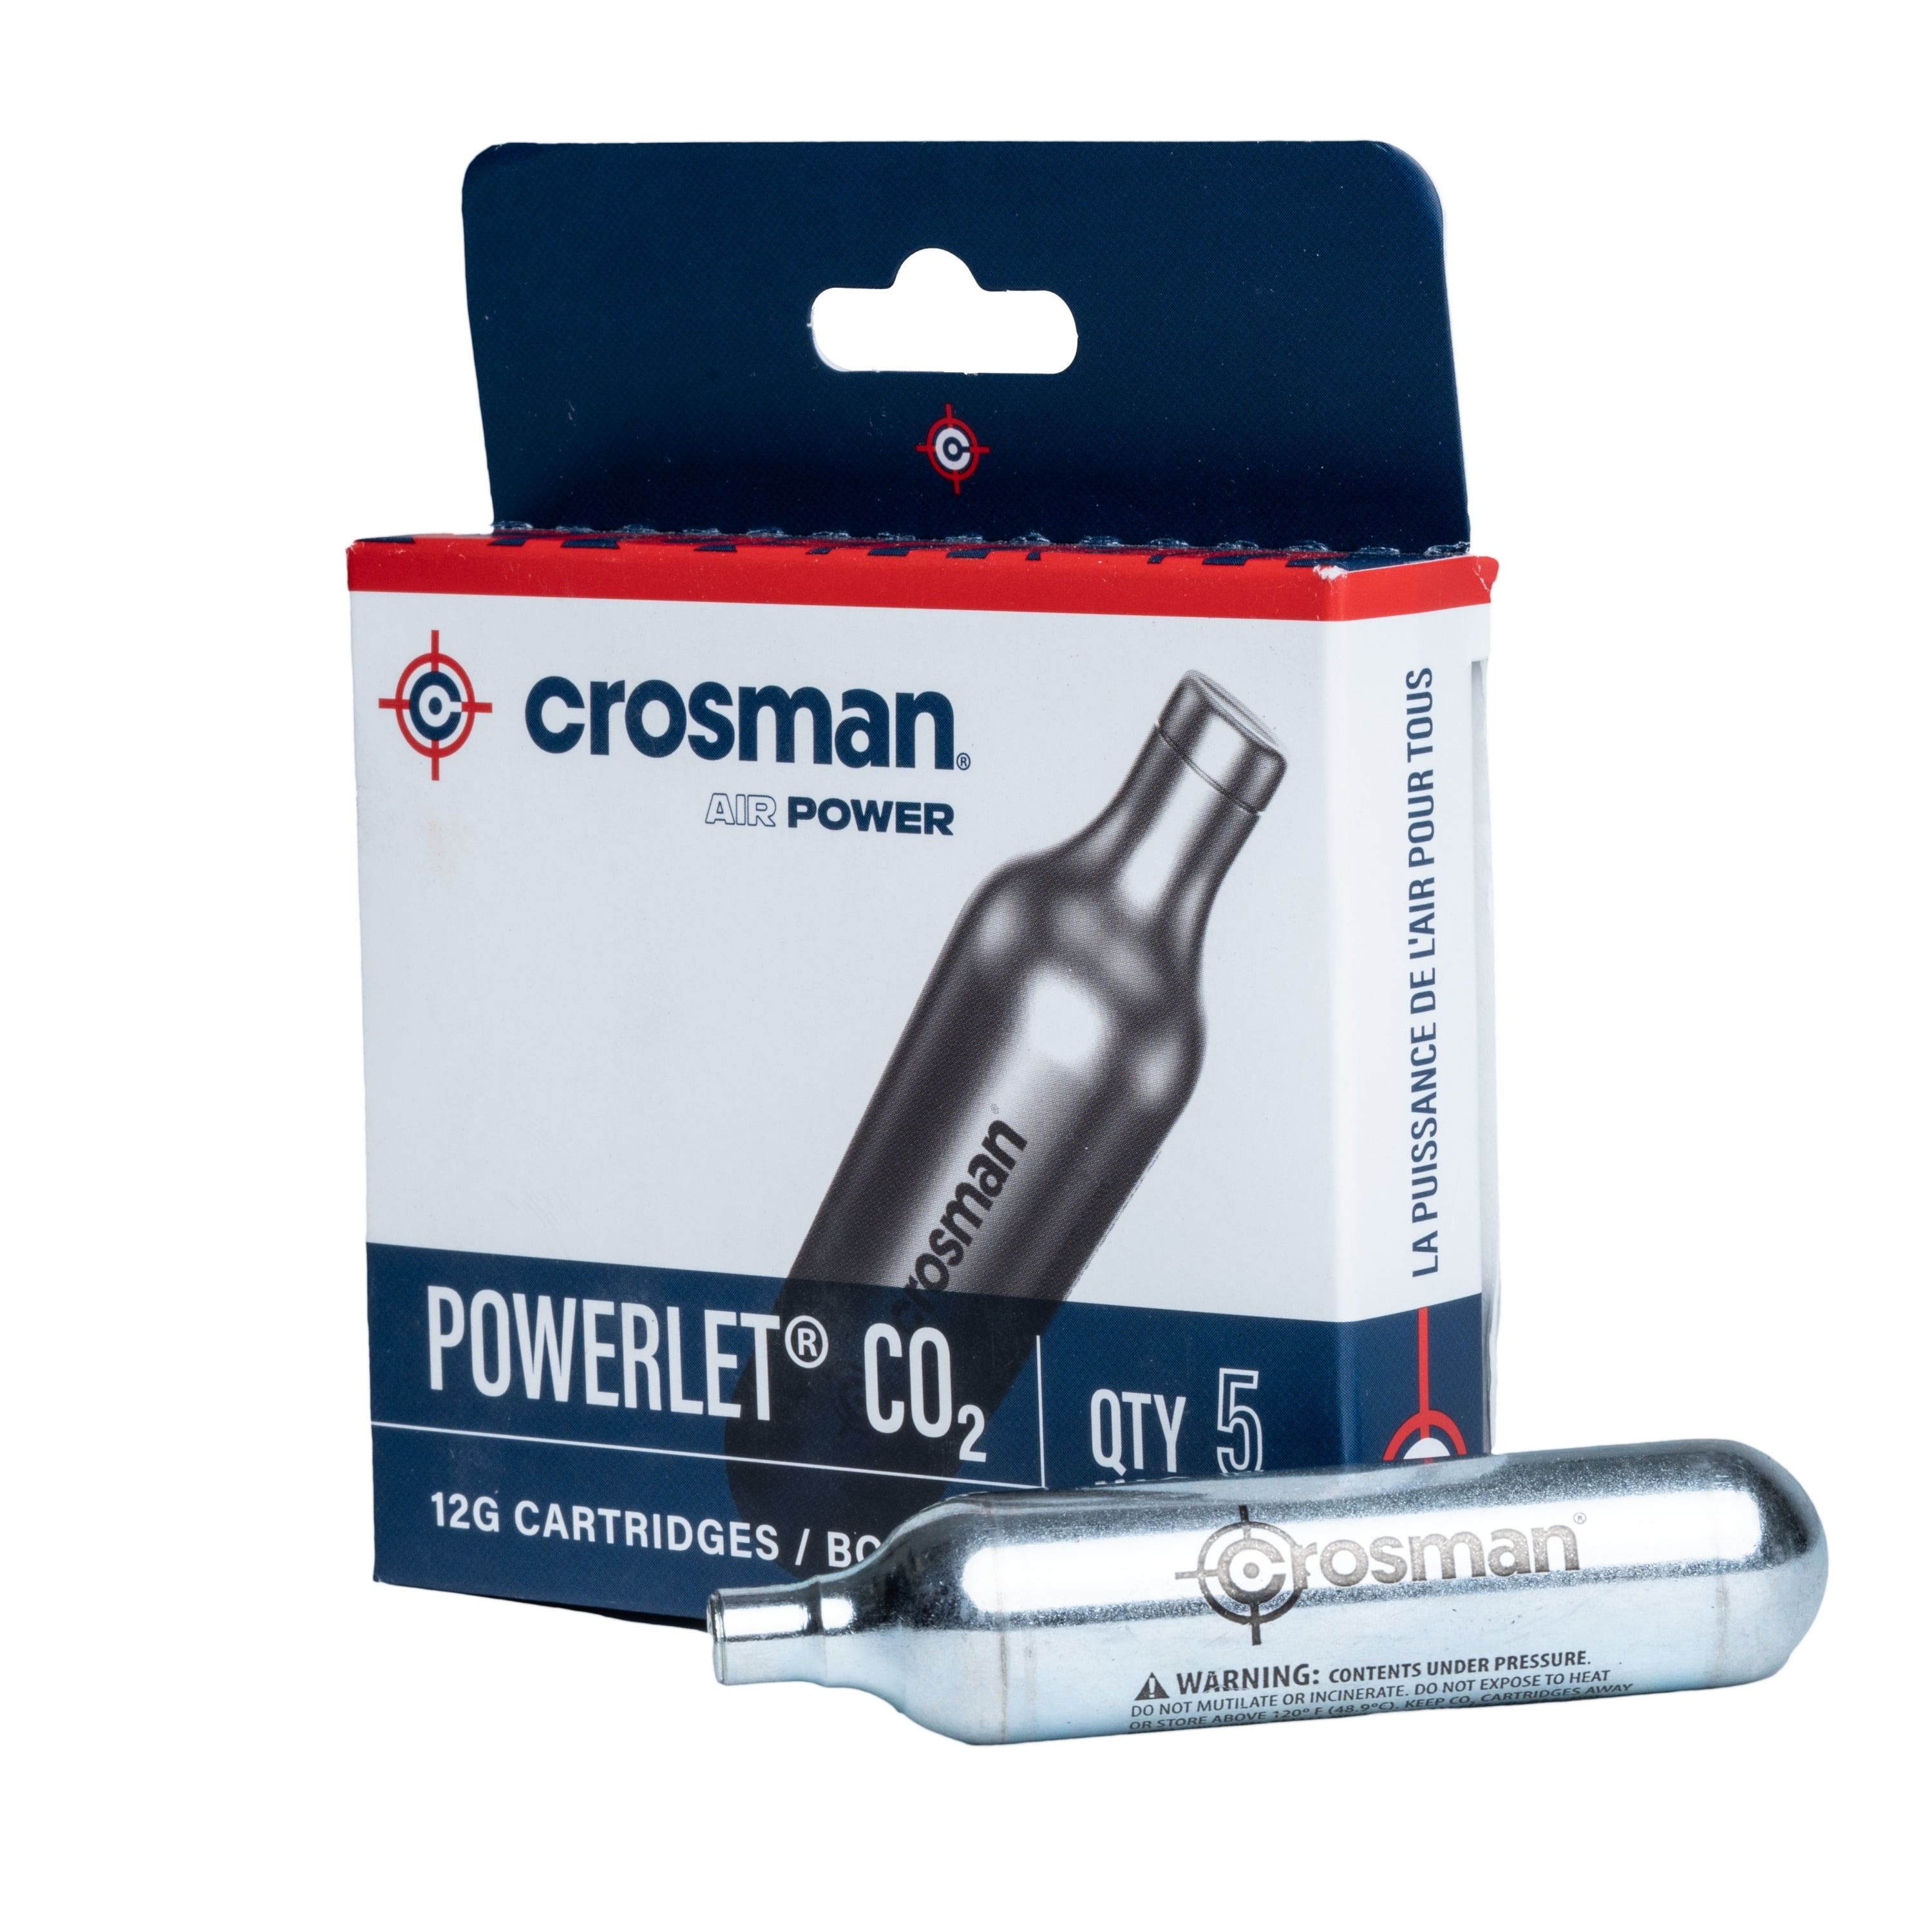 Crosman 12-Gram Powerlet CO2, 5 Ct, 231B